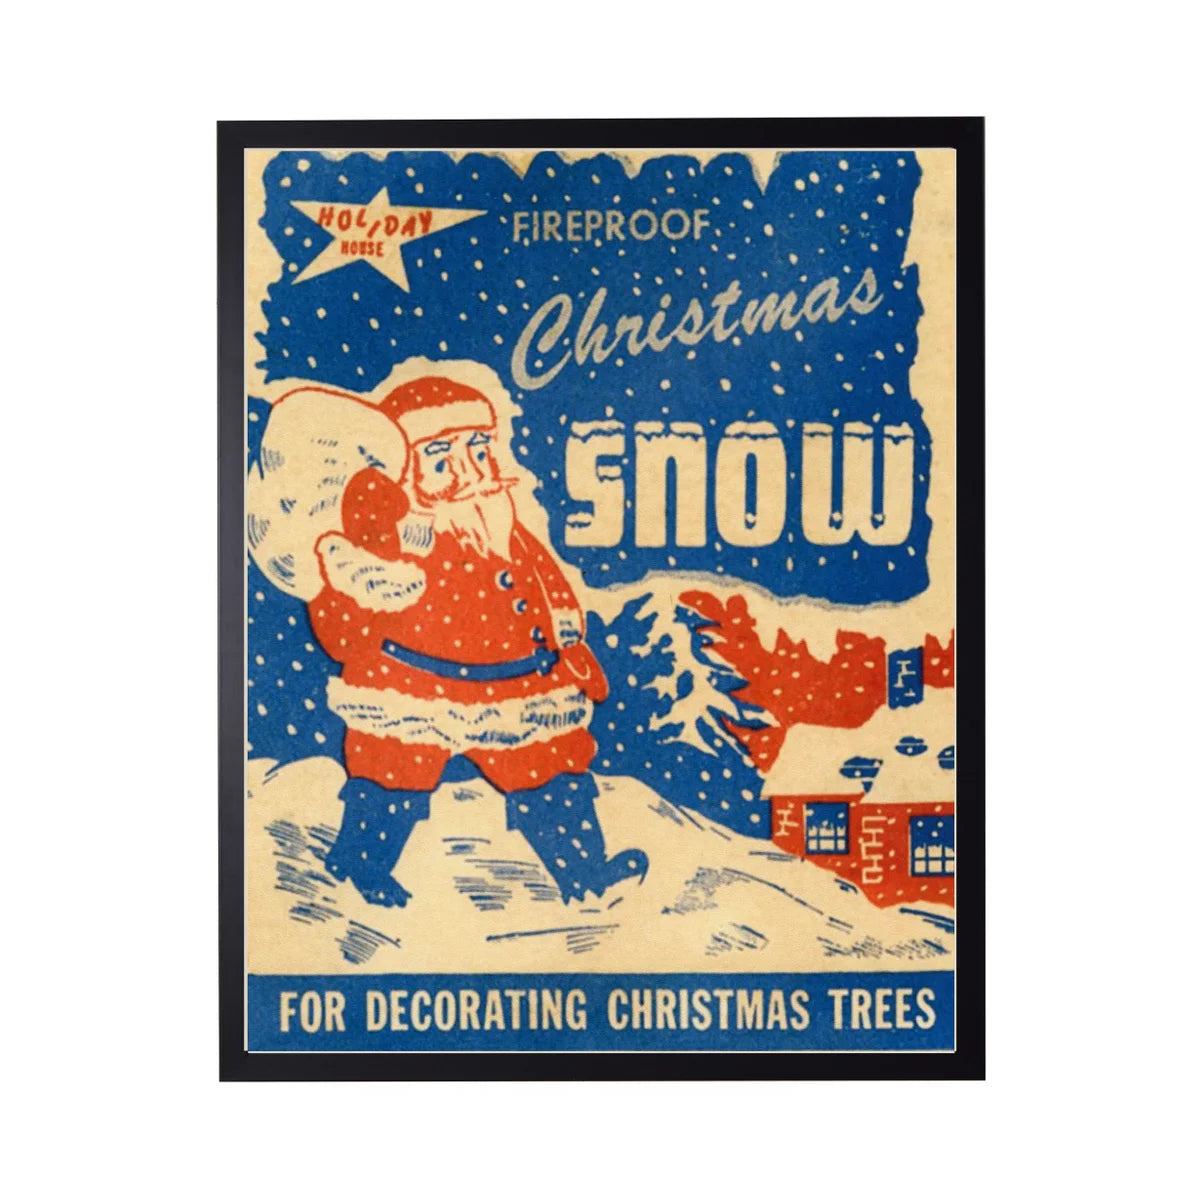 Vintage Christmas Snow Poster with Santa